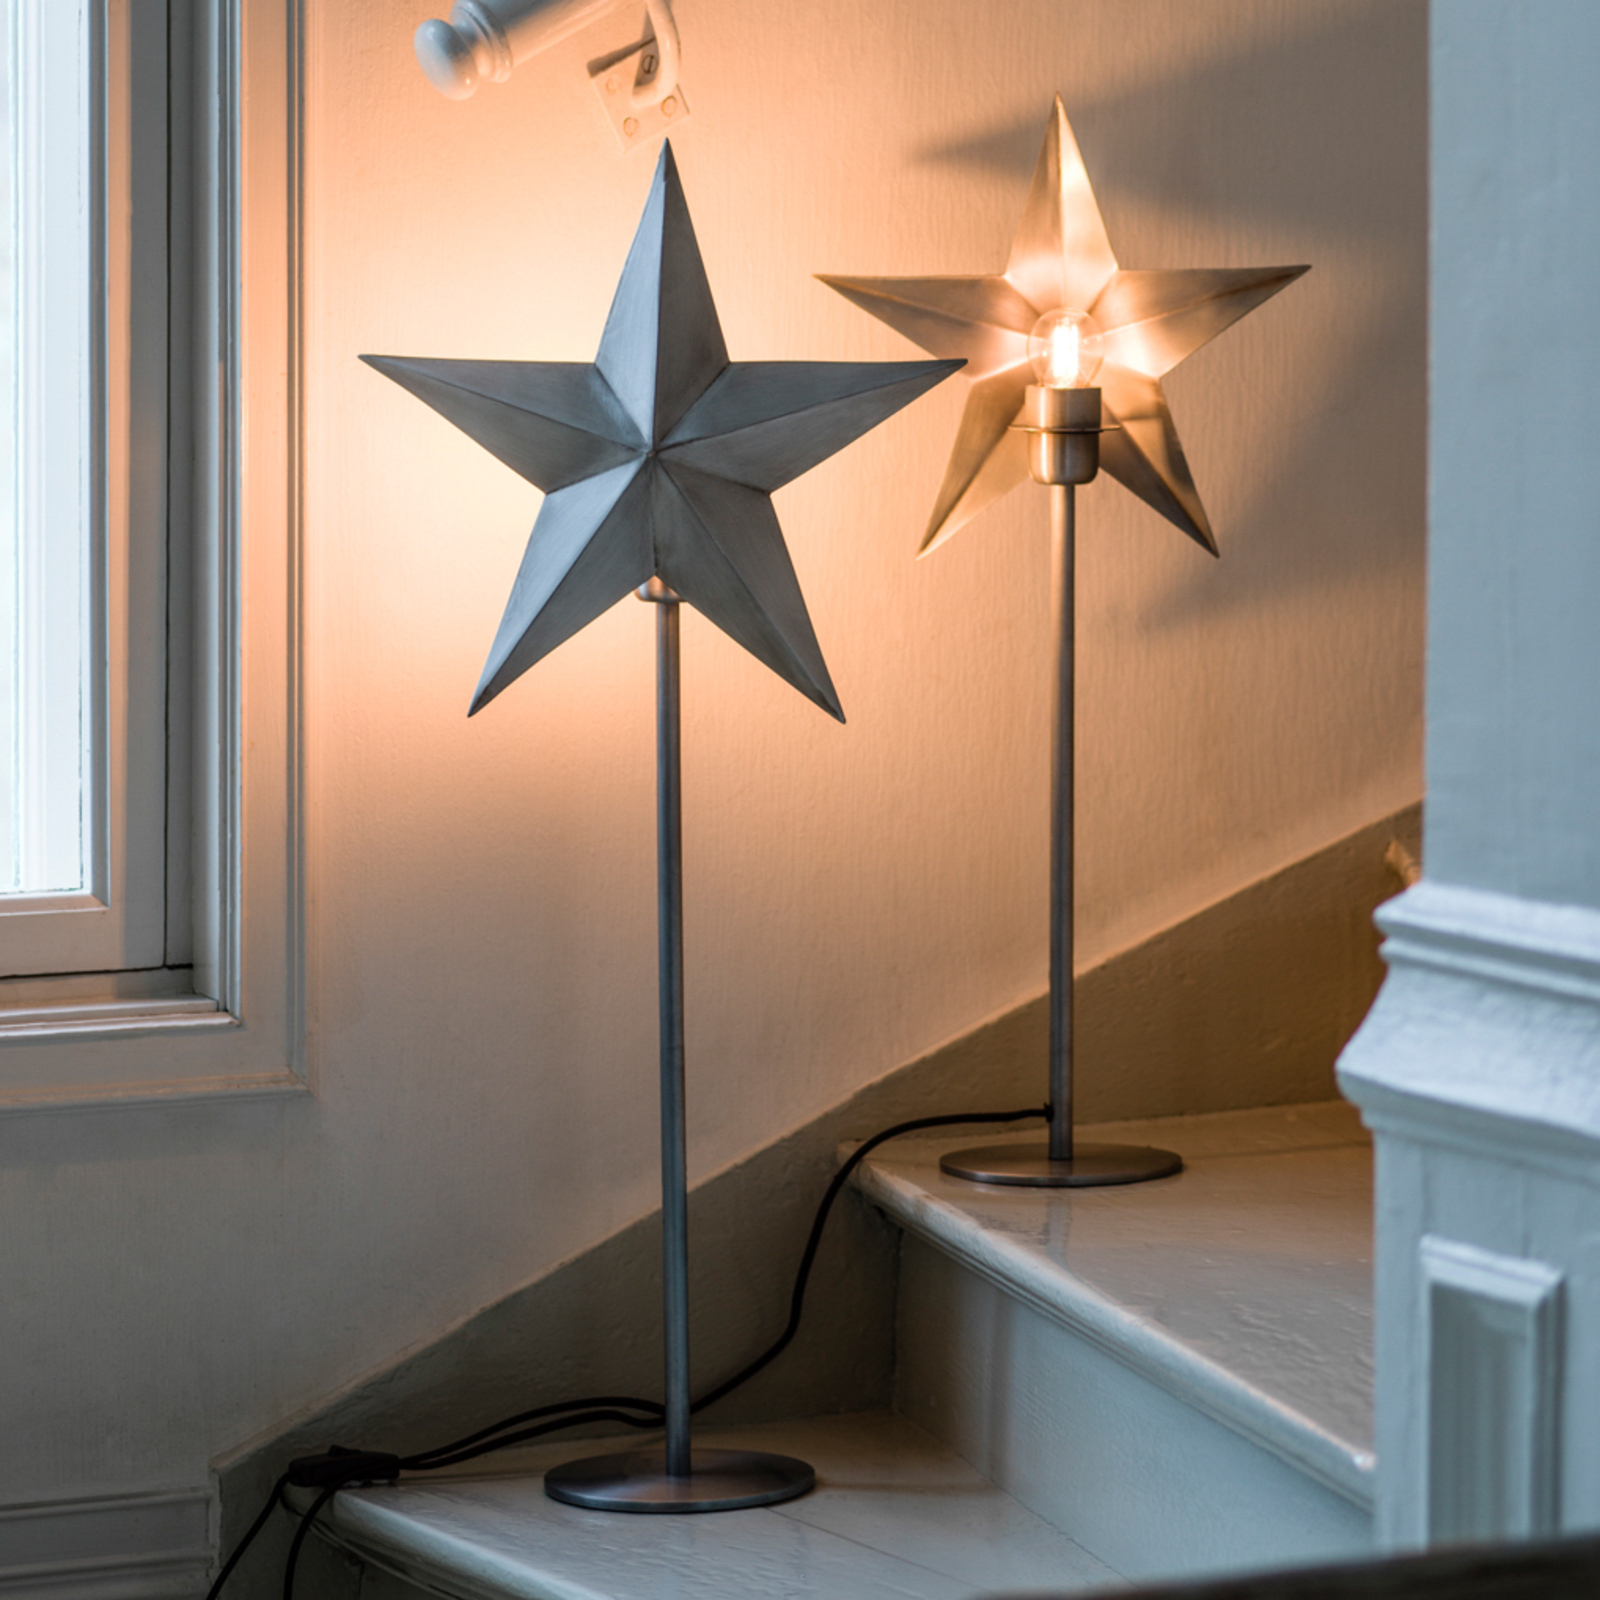 PR Home Σκανδιναβικό μεταλλικό σταντ αστέρι, ασημί